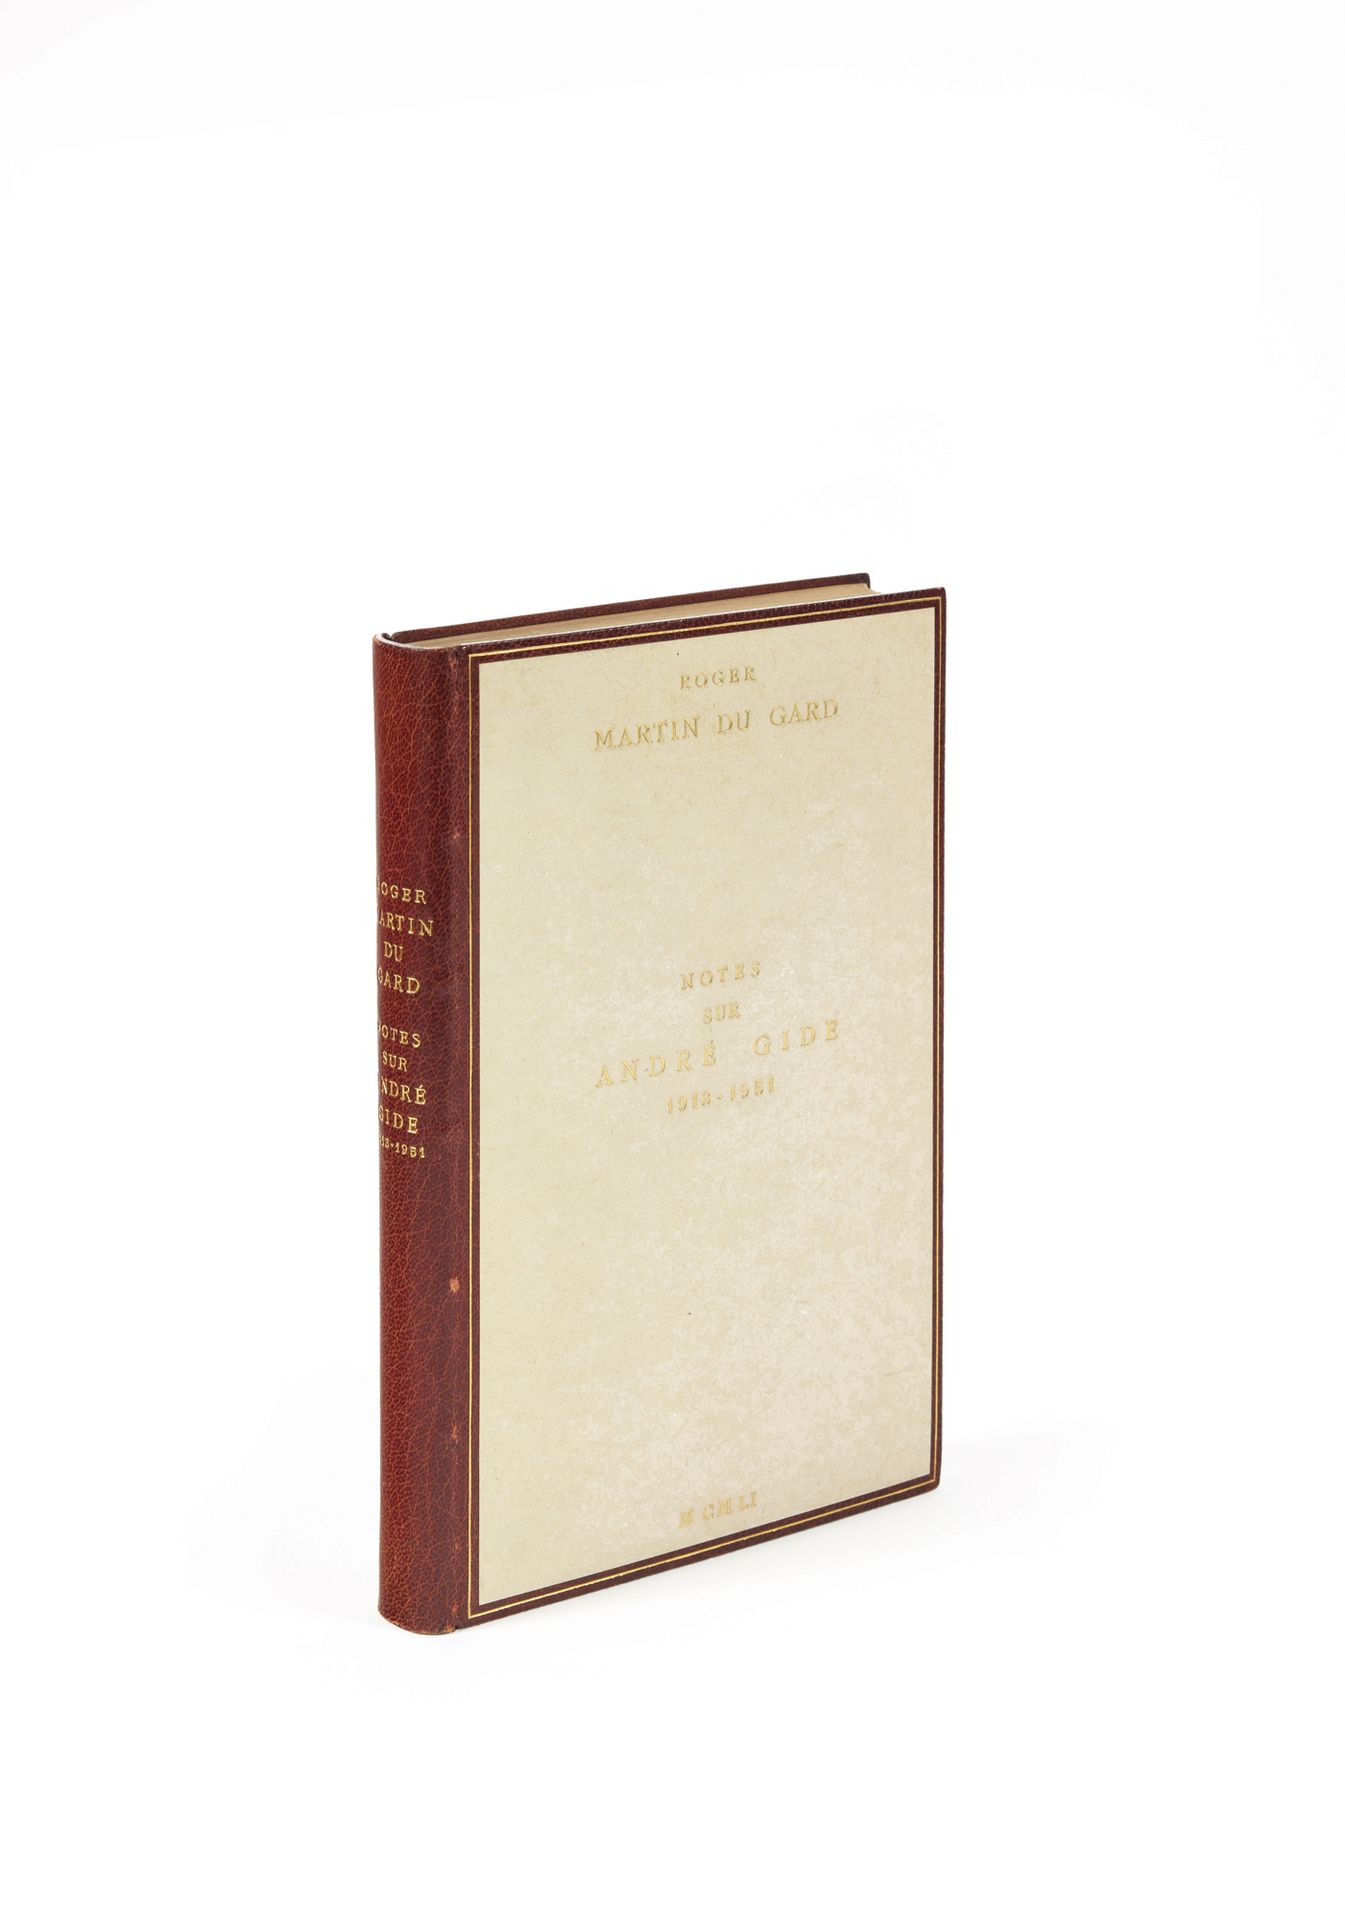 Martin du Gard, Roger Notas sobre André Gide 1913-1951. París, Gallimard, 1951; &hellip;